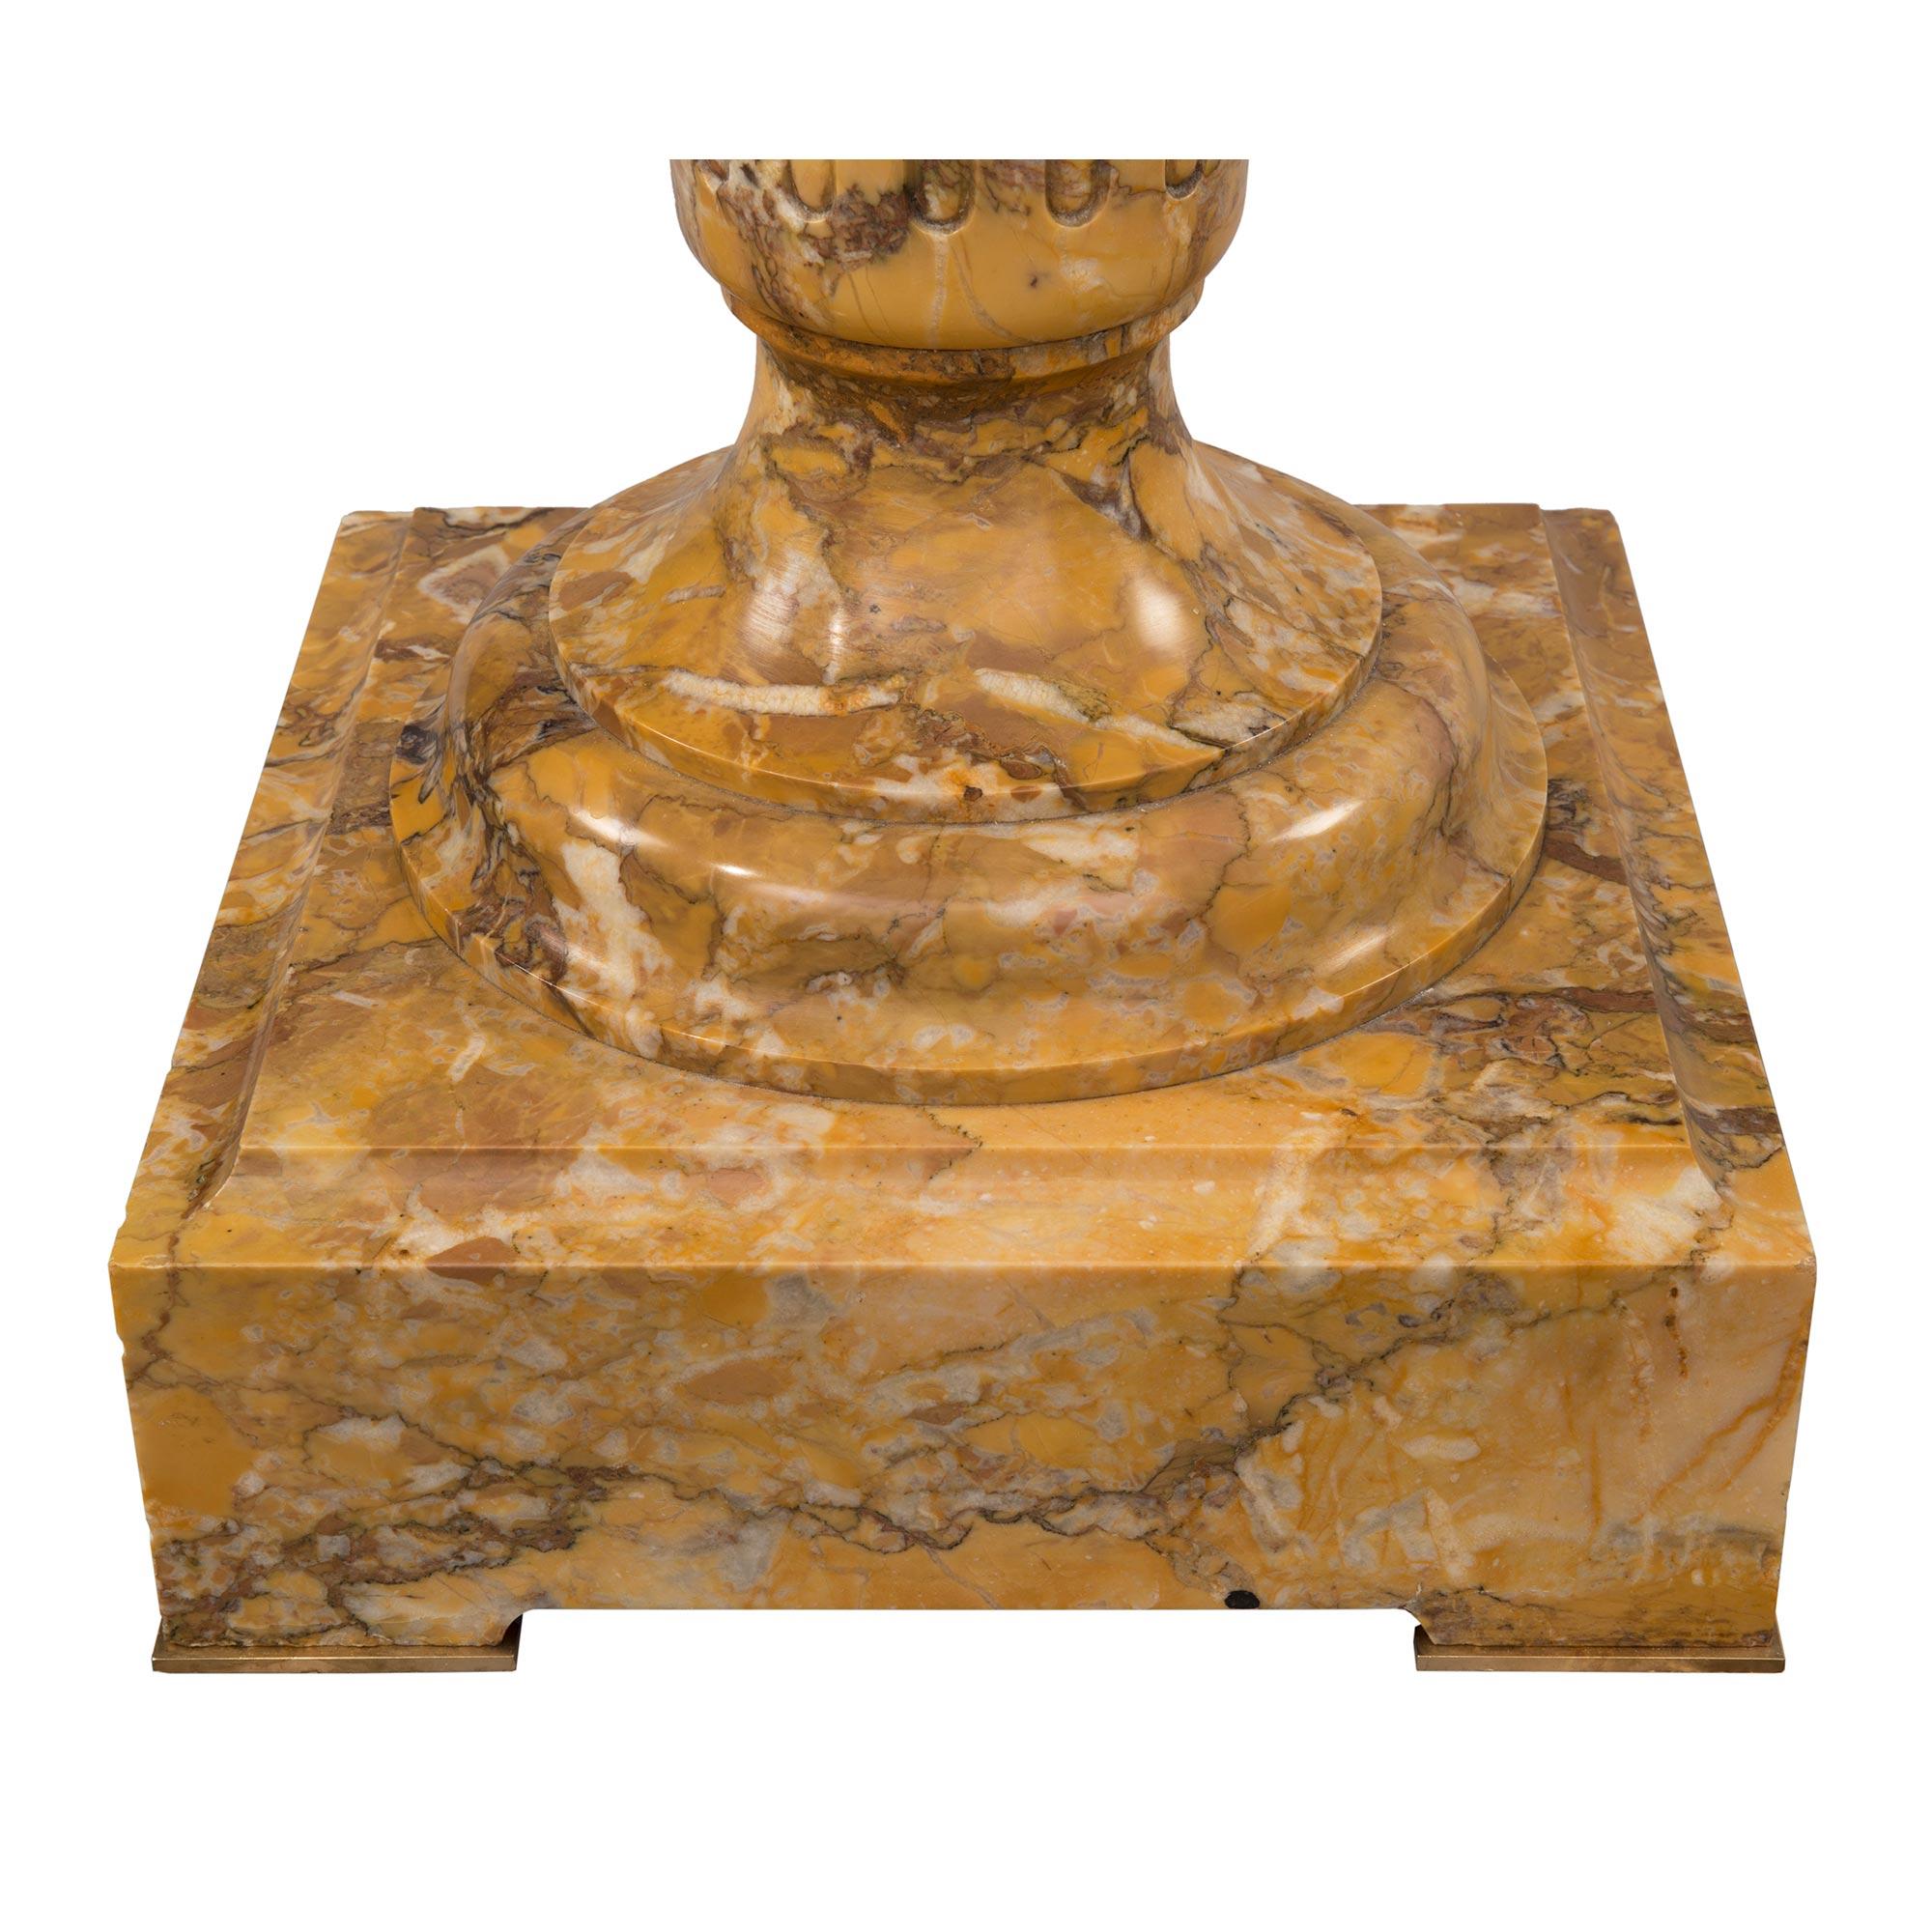 Pair of Italian Mid-19th Century Sienna Marble & Ormolu Mounted Pedestal Columns For Sale 3